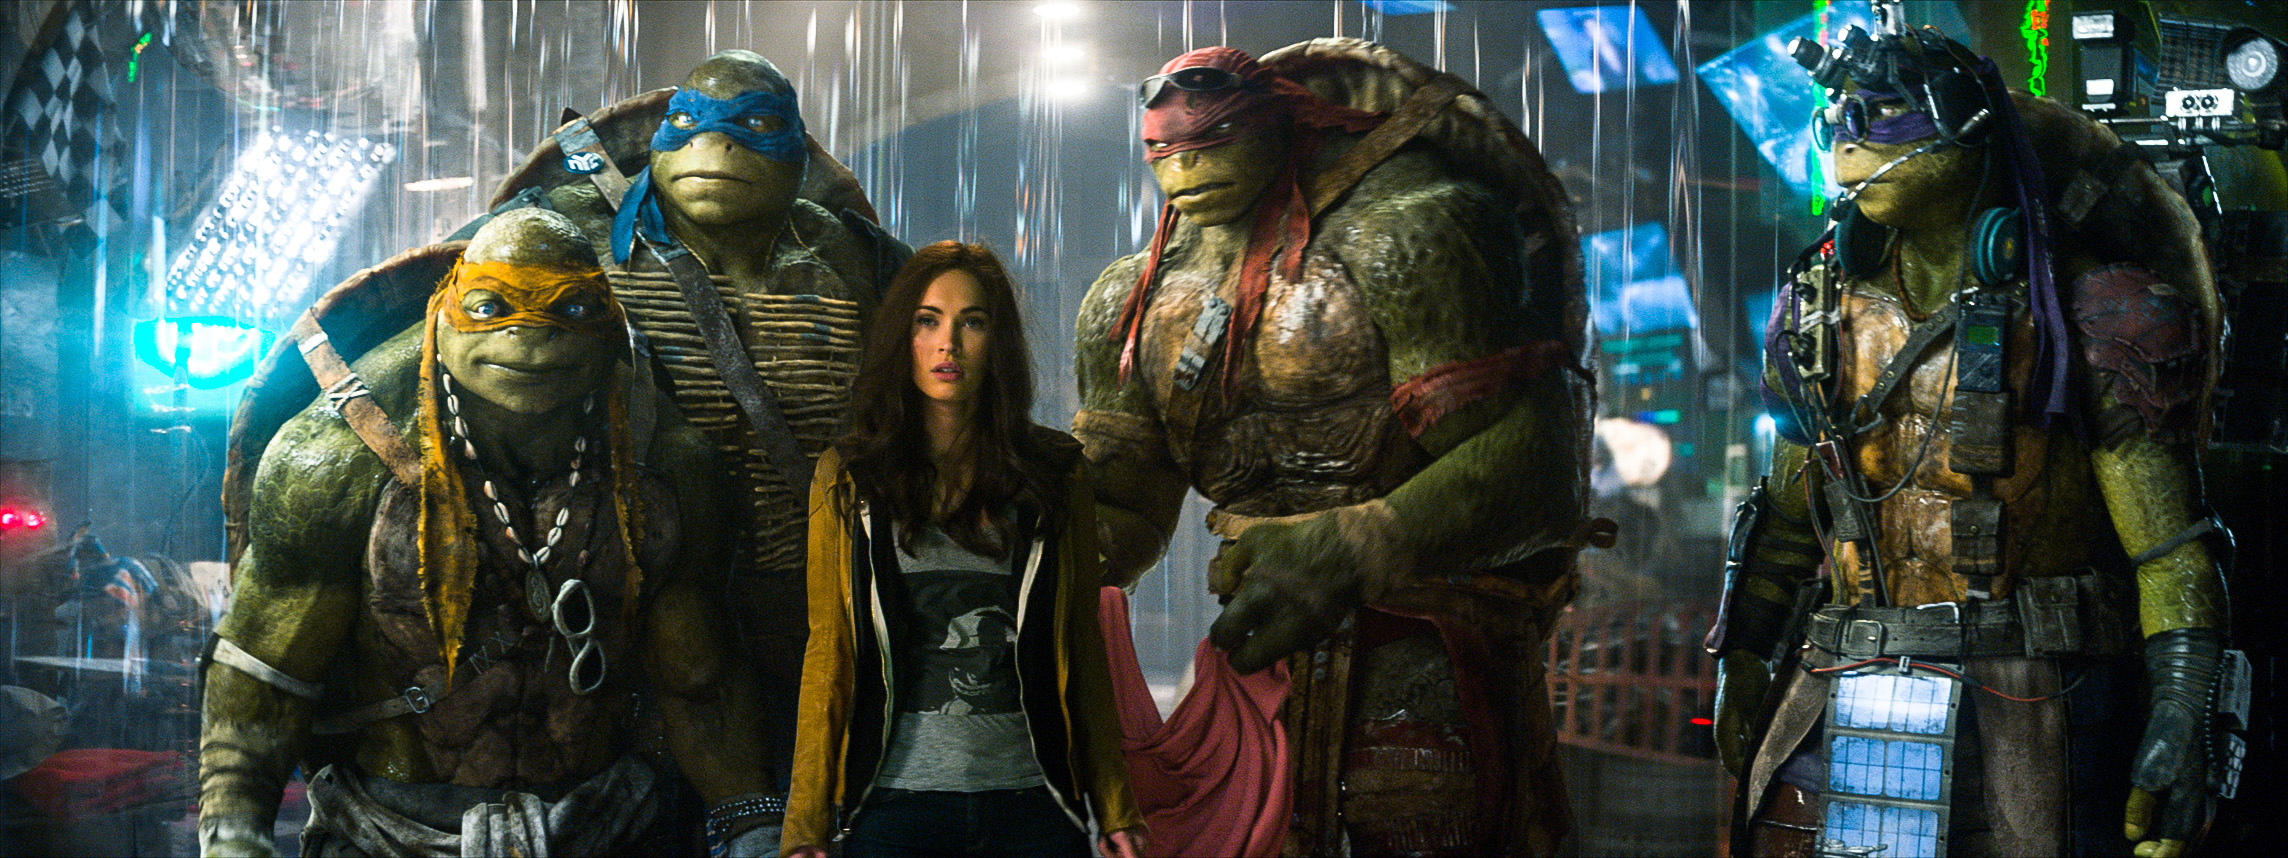 Megan Fox stars as April O'Neil in <i>Teenage Mutant Ninja Turtles</i> alongside (L-R) Michelangelo, Leonardo, Raphael and Donatello. (Industrial Light &amp; Magic / Paramount)